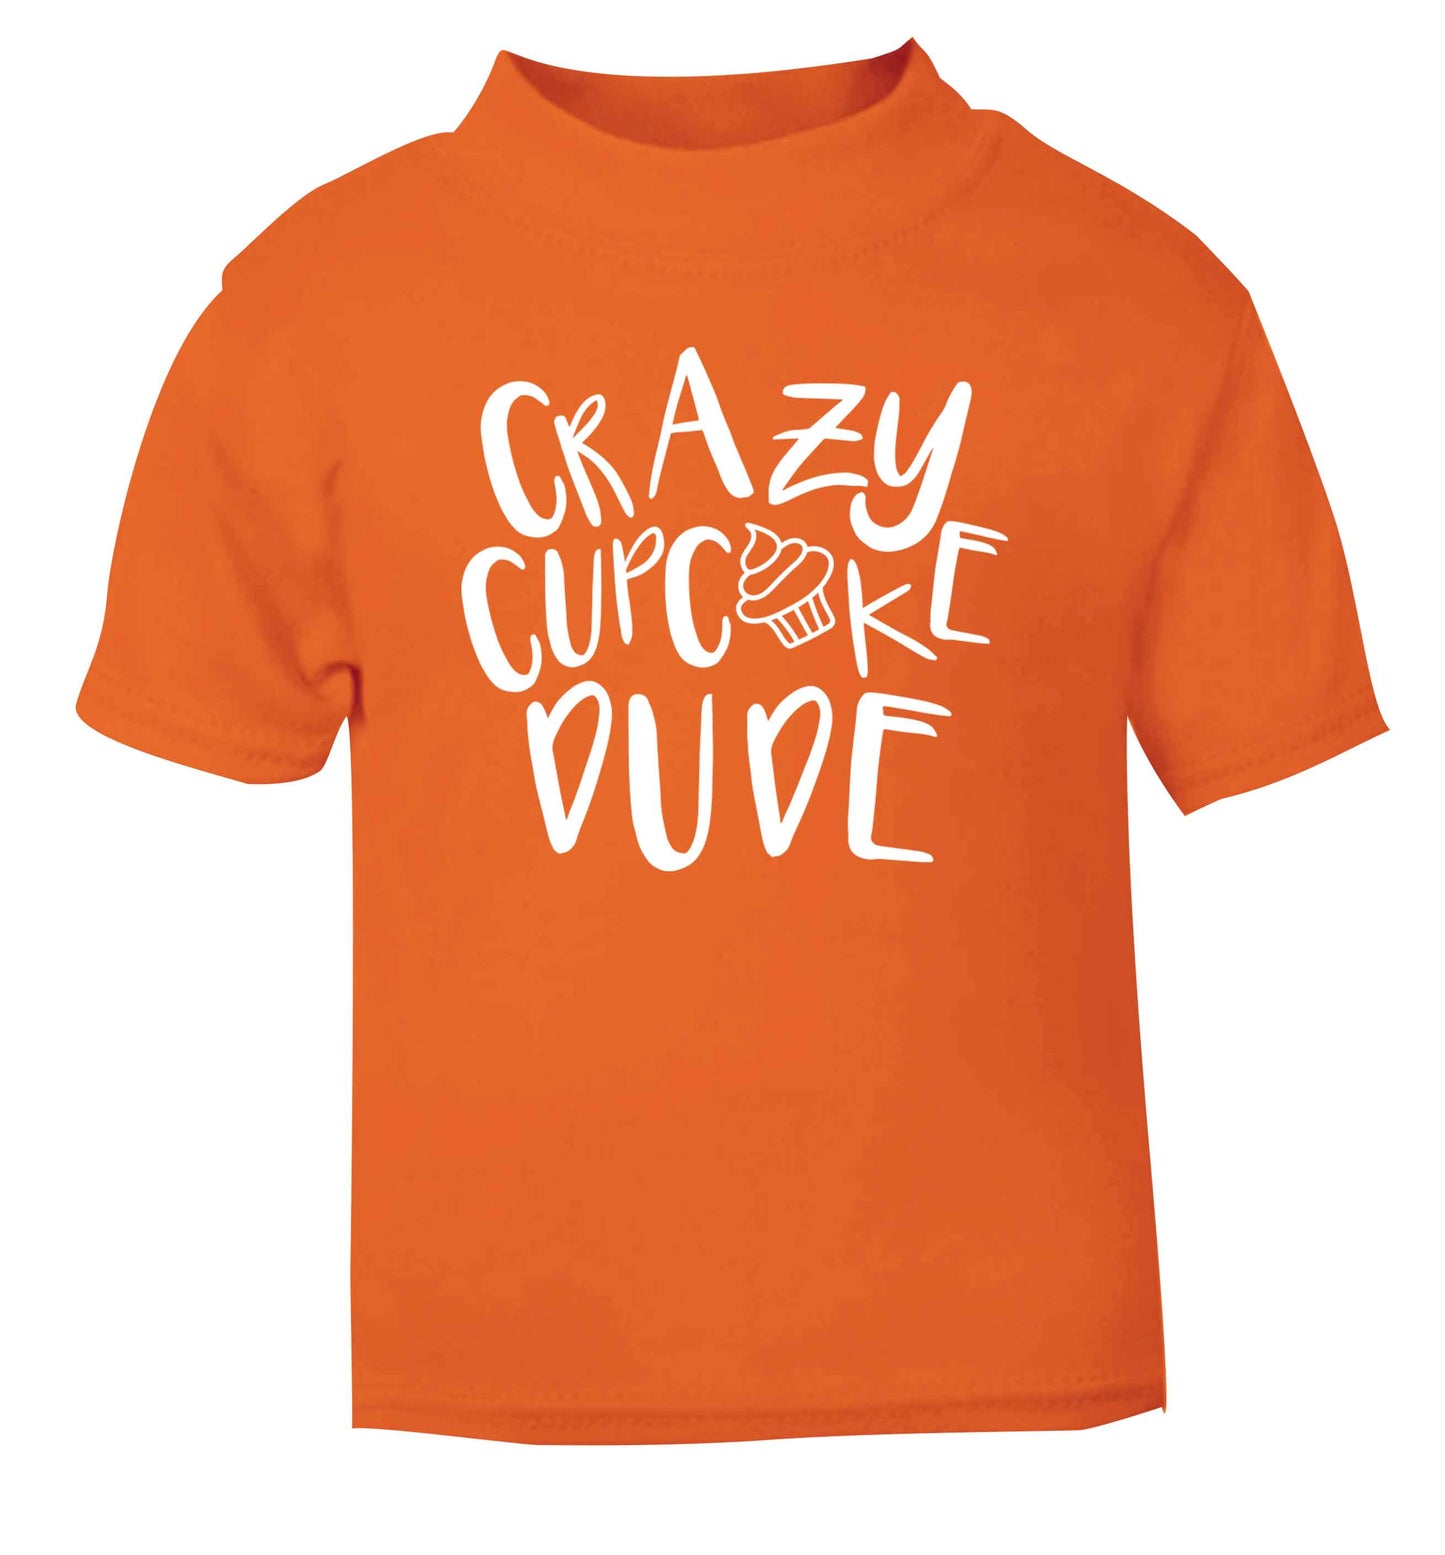 Crazy cupcake dude orange Baby Toddler Tshirt 2 Years